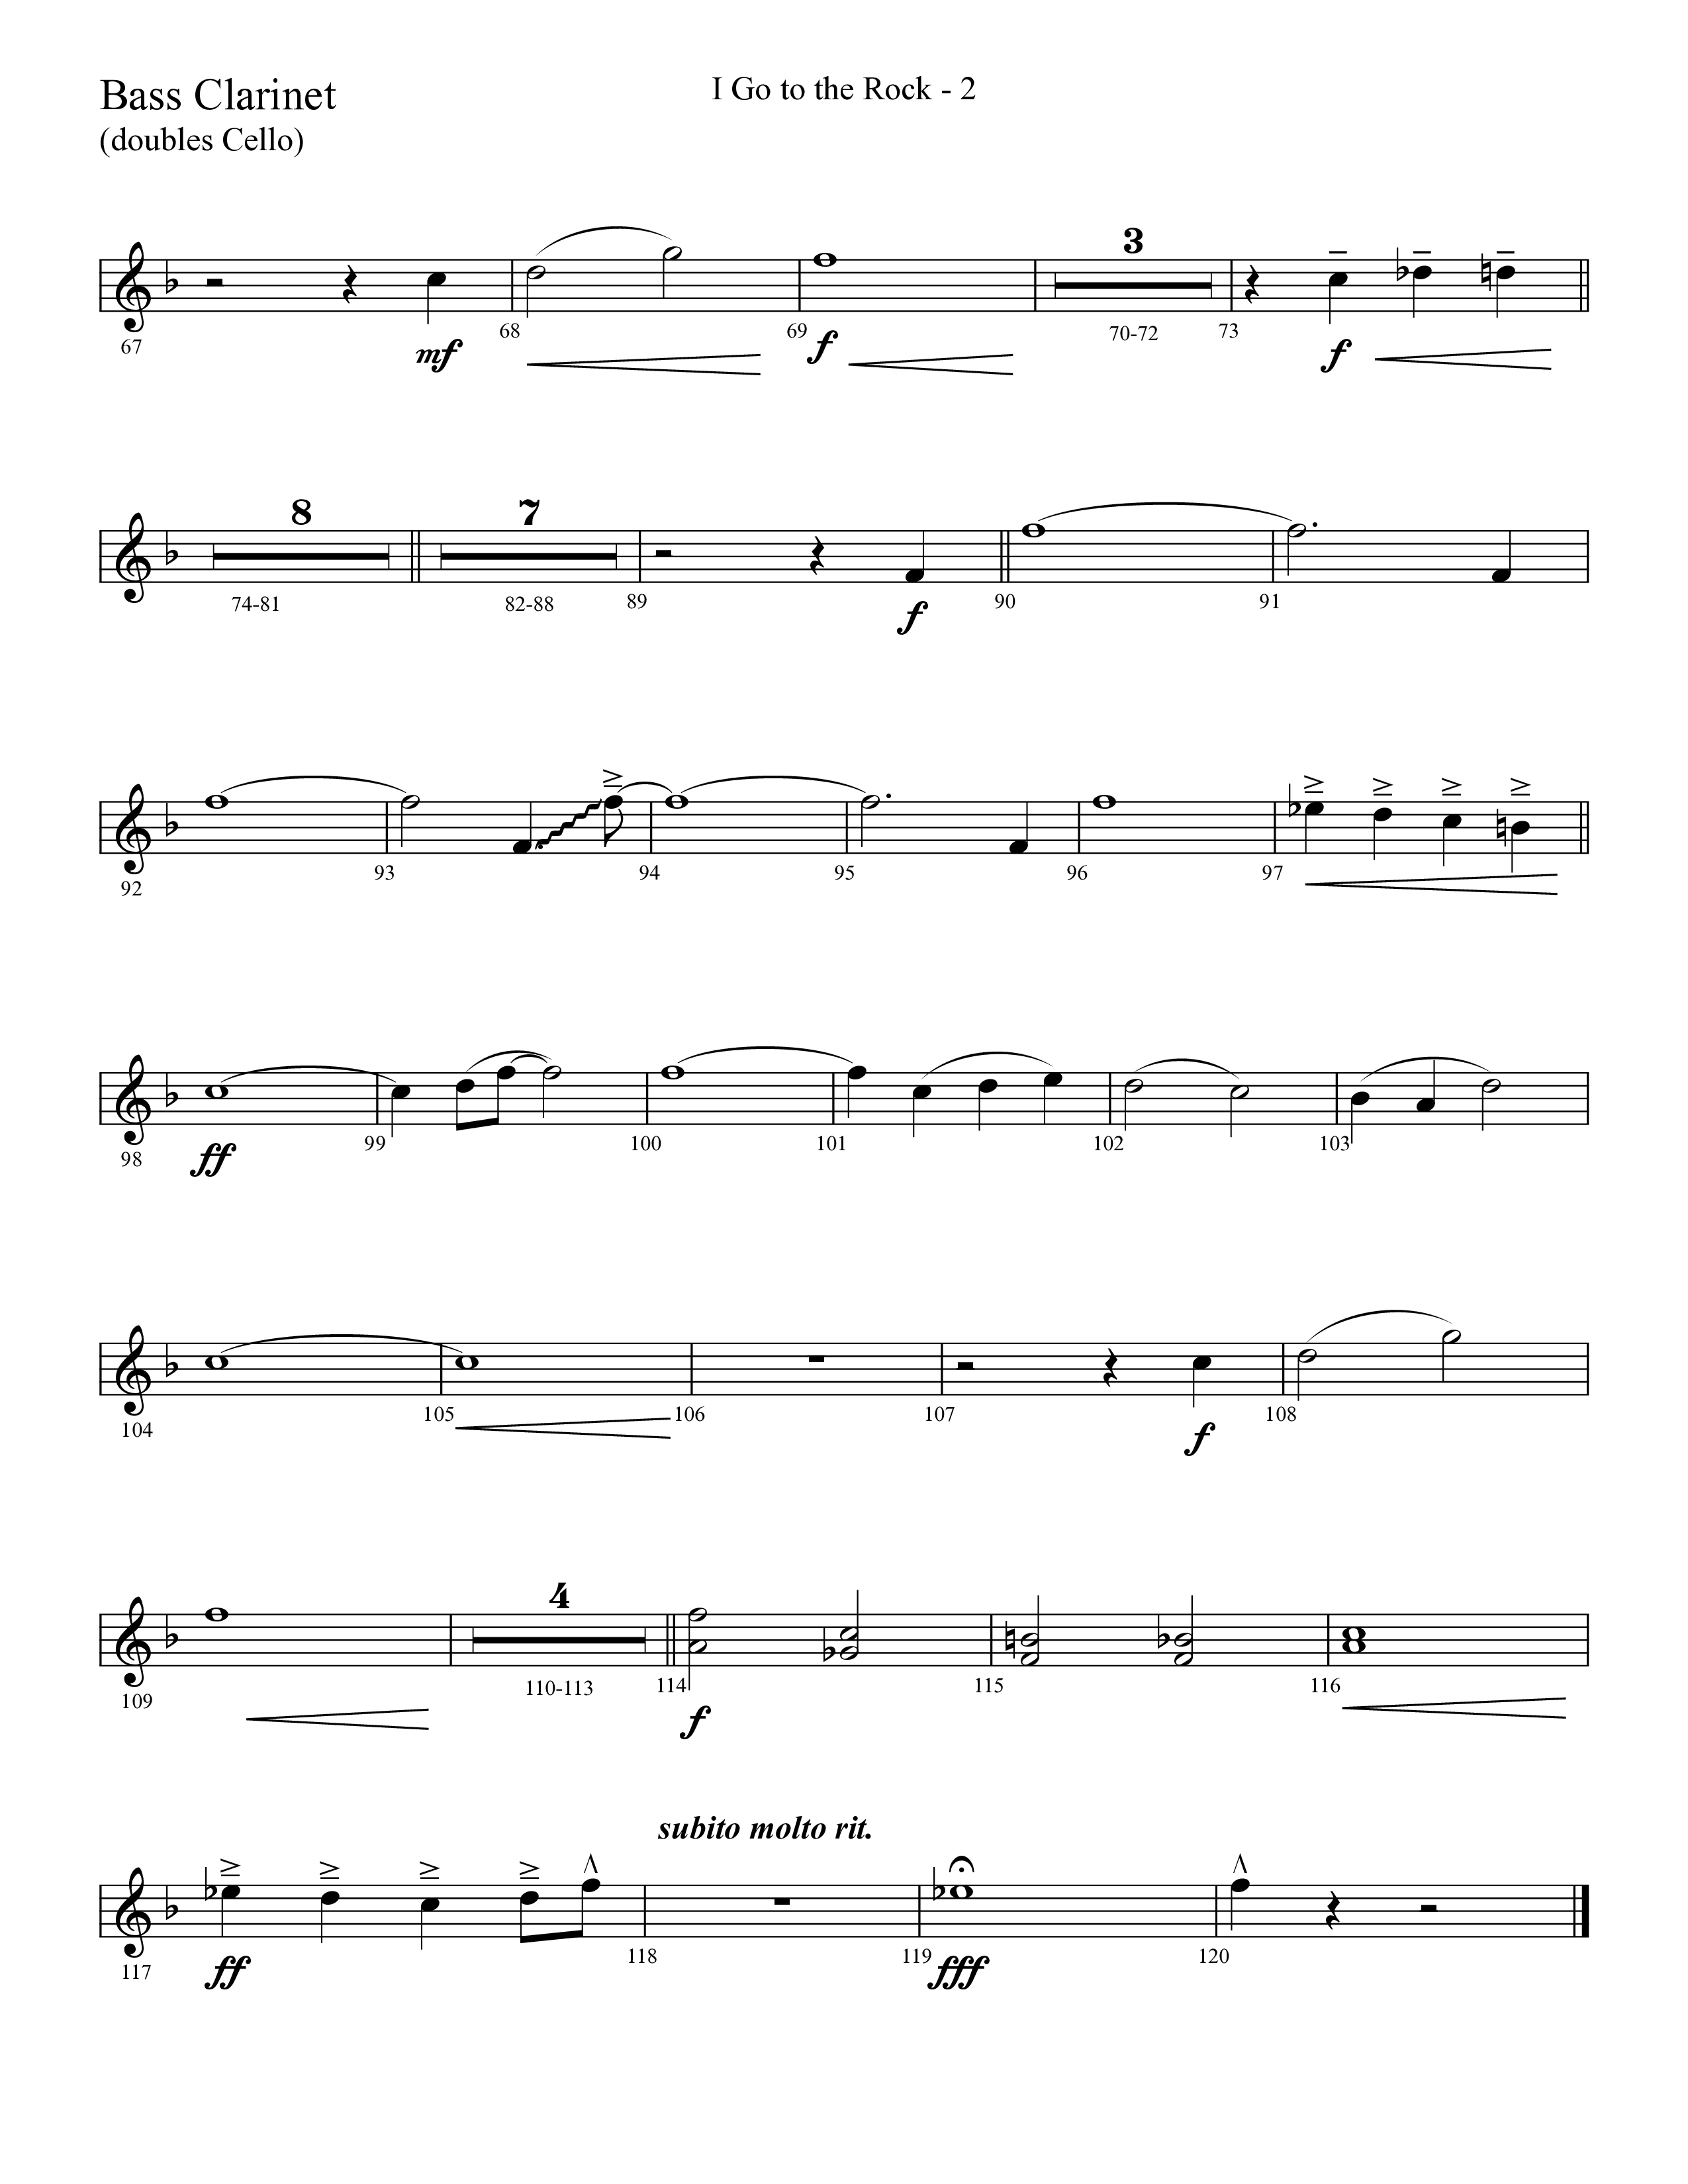 I Go To The Rock (Choral Anthem SATB) Bass Clarinet (Lifeway Choral / Arr. Cliff Duren)